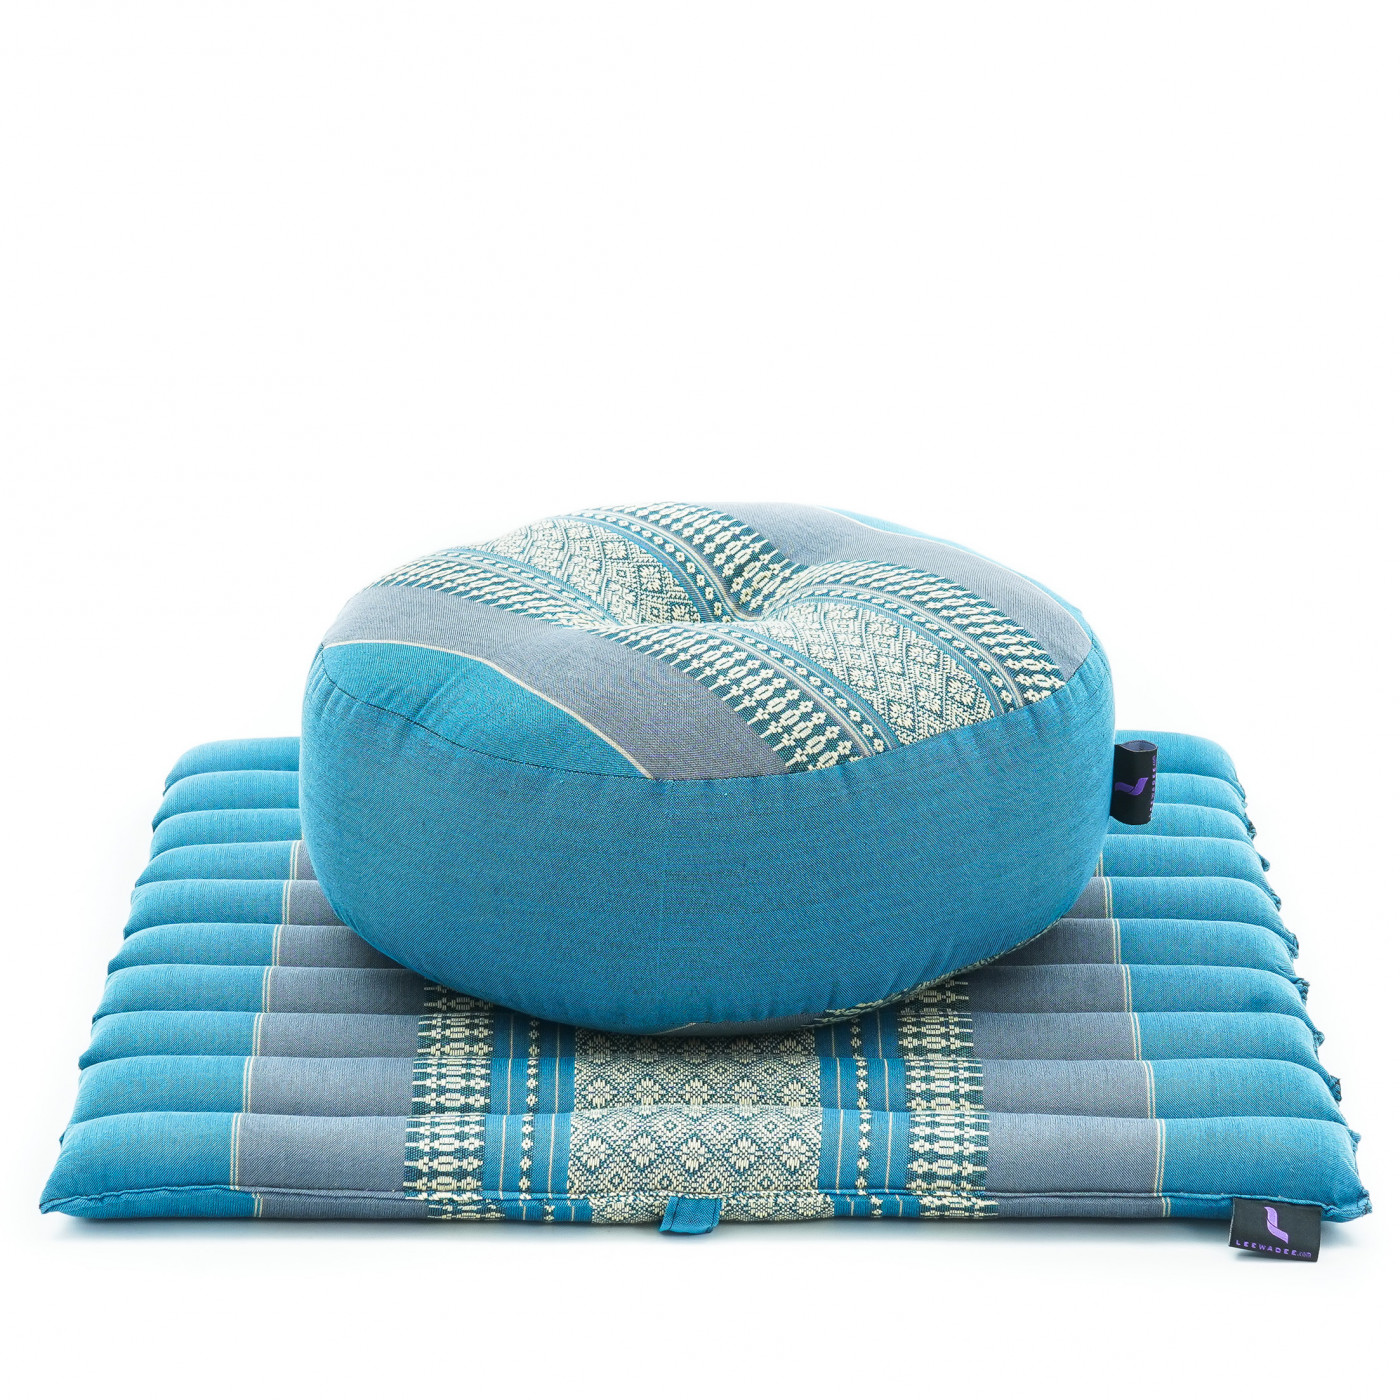 Red Leewadee Yoga Cushion/Yoga Block/Meditation Cushion 35 x 15 x 10 cm 